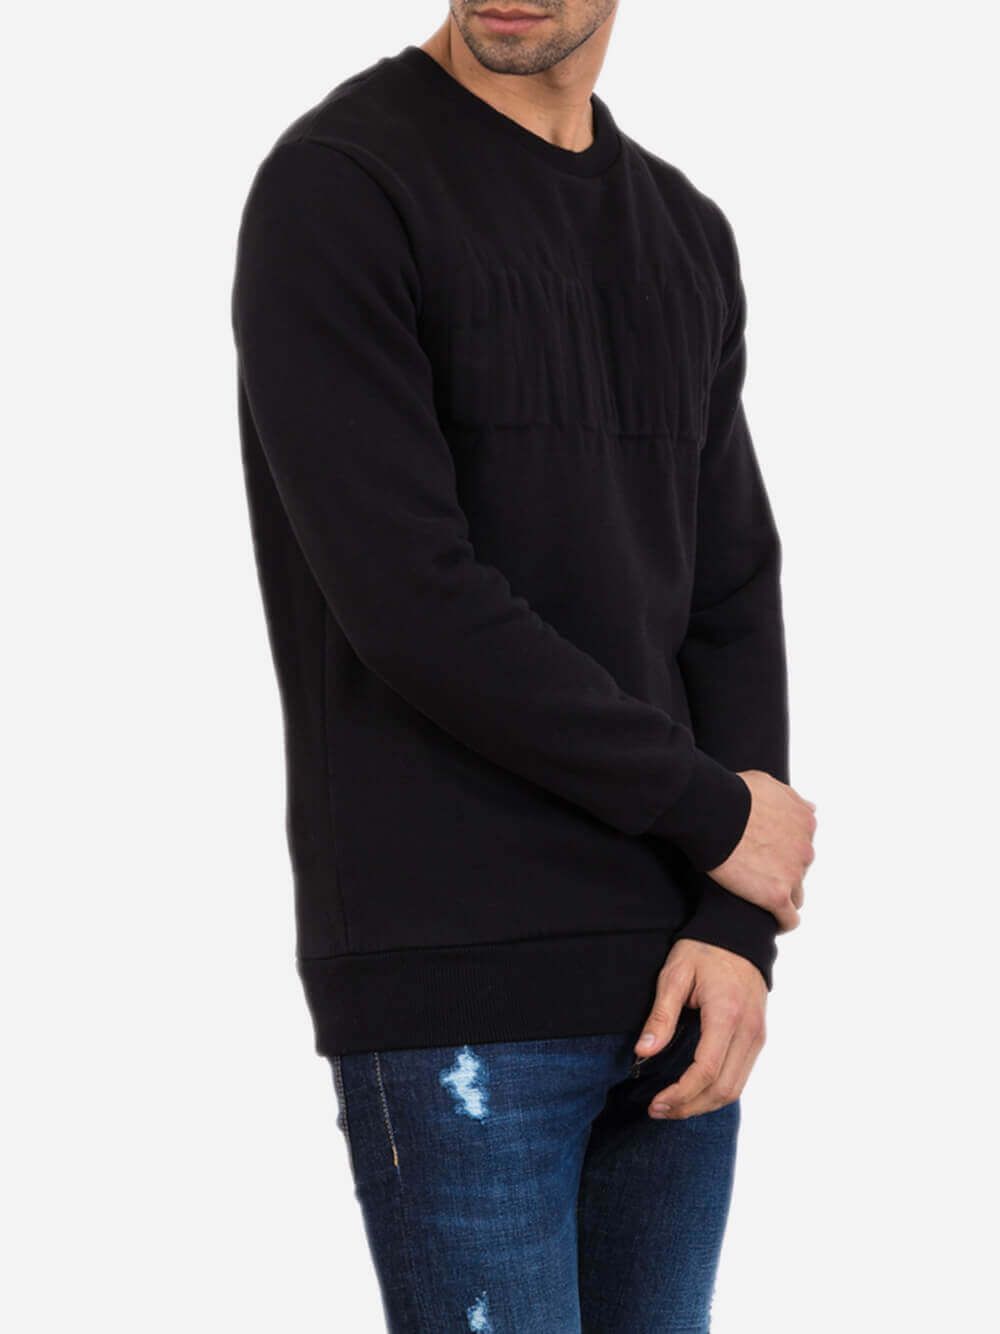 Gentleman Black Sweater | Inimigo Clothing